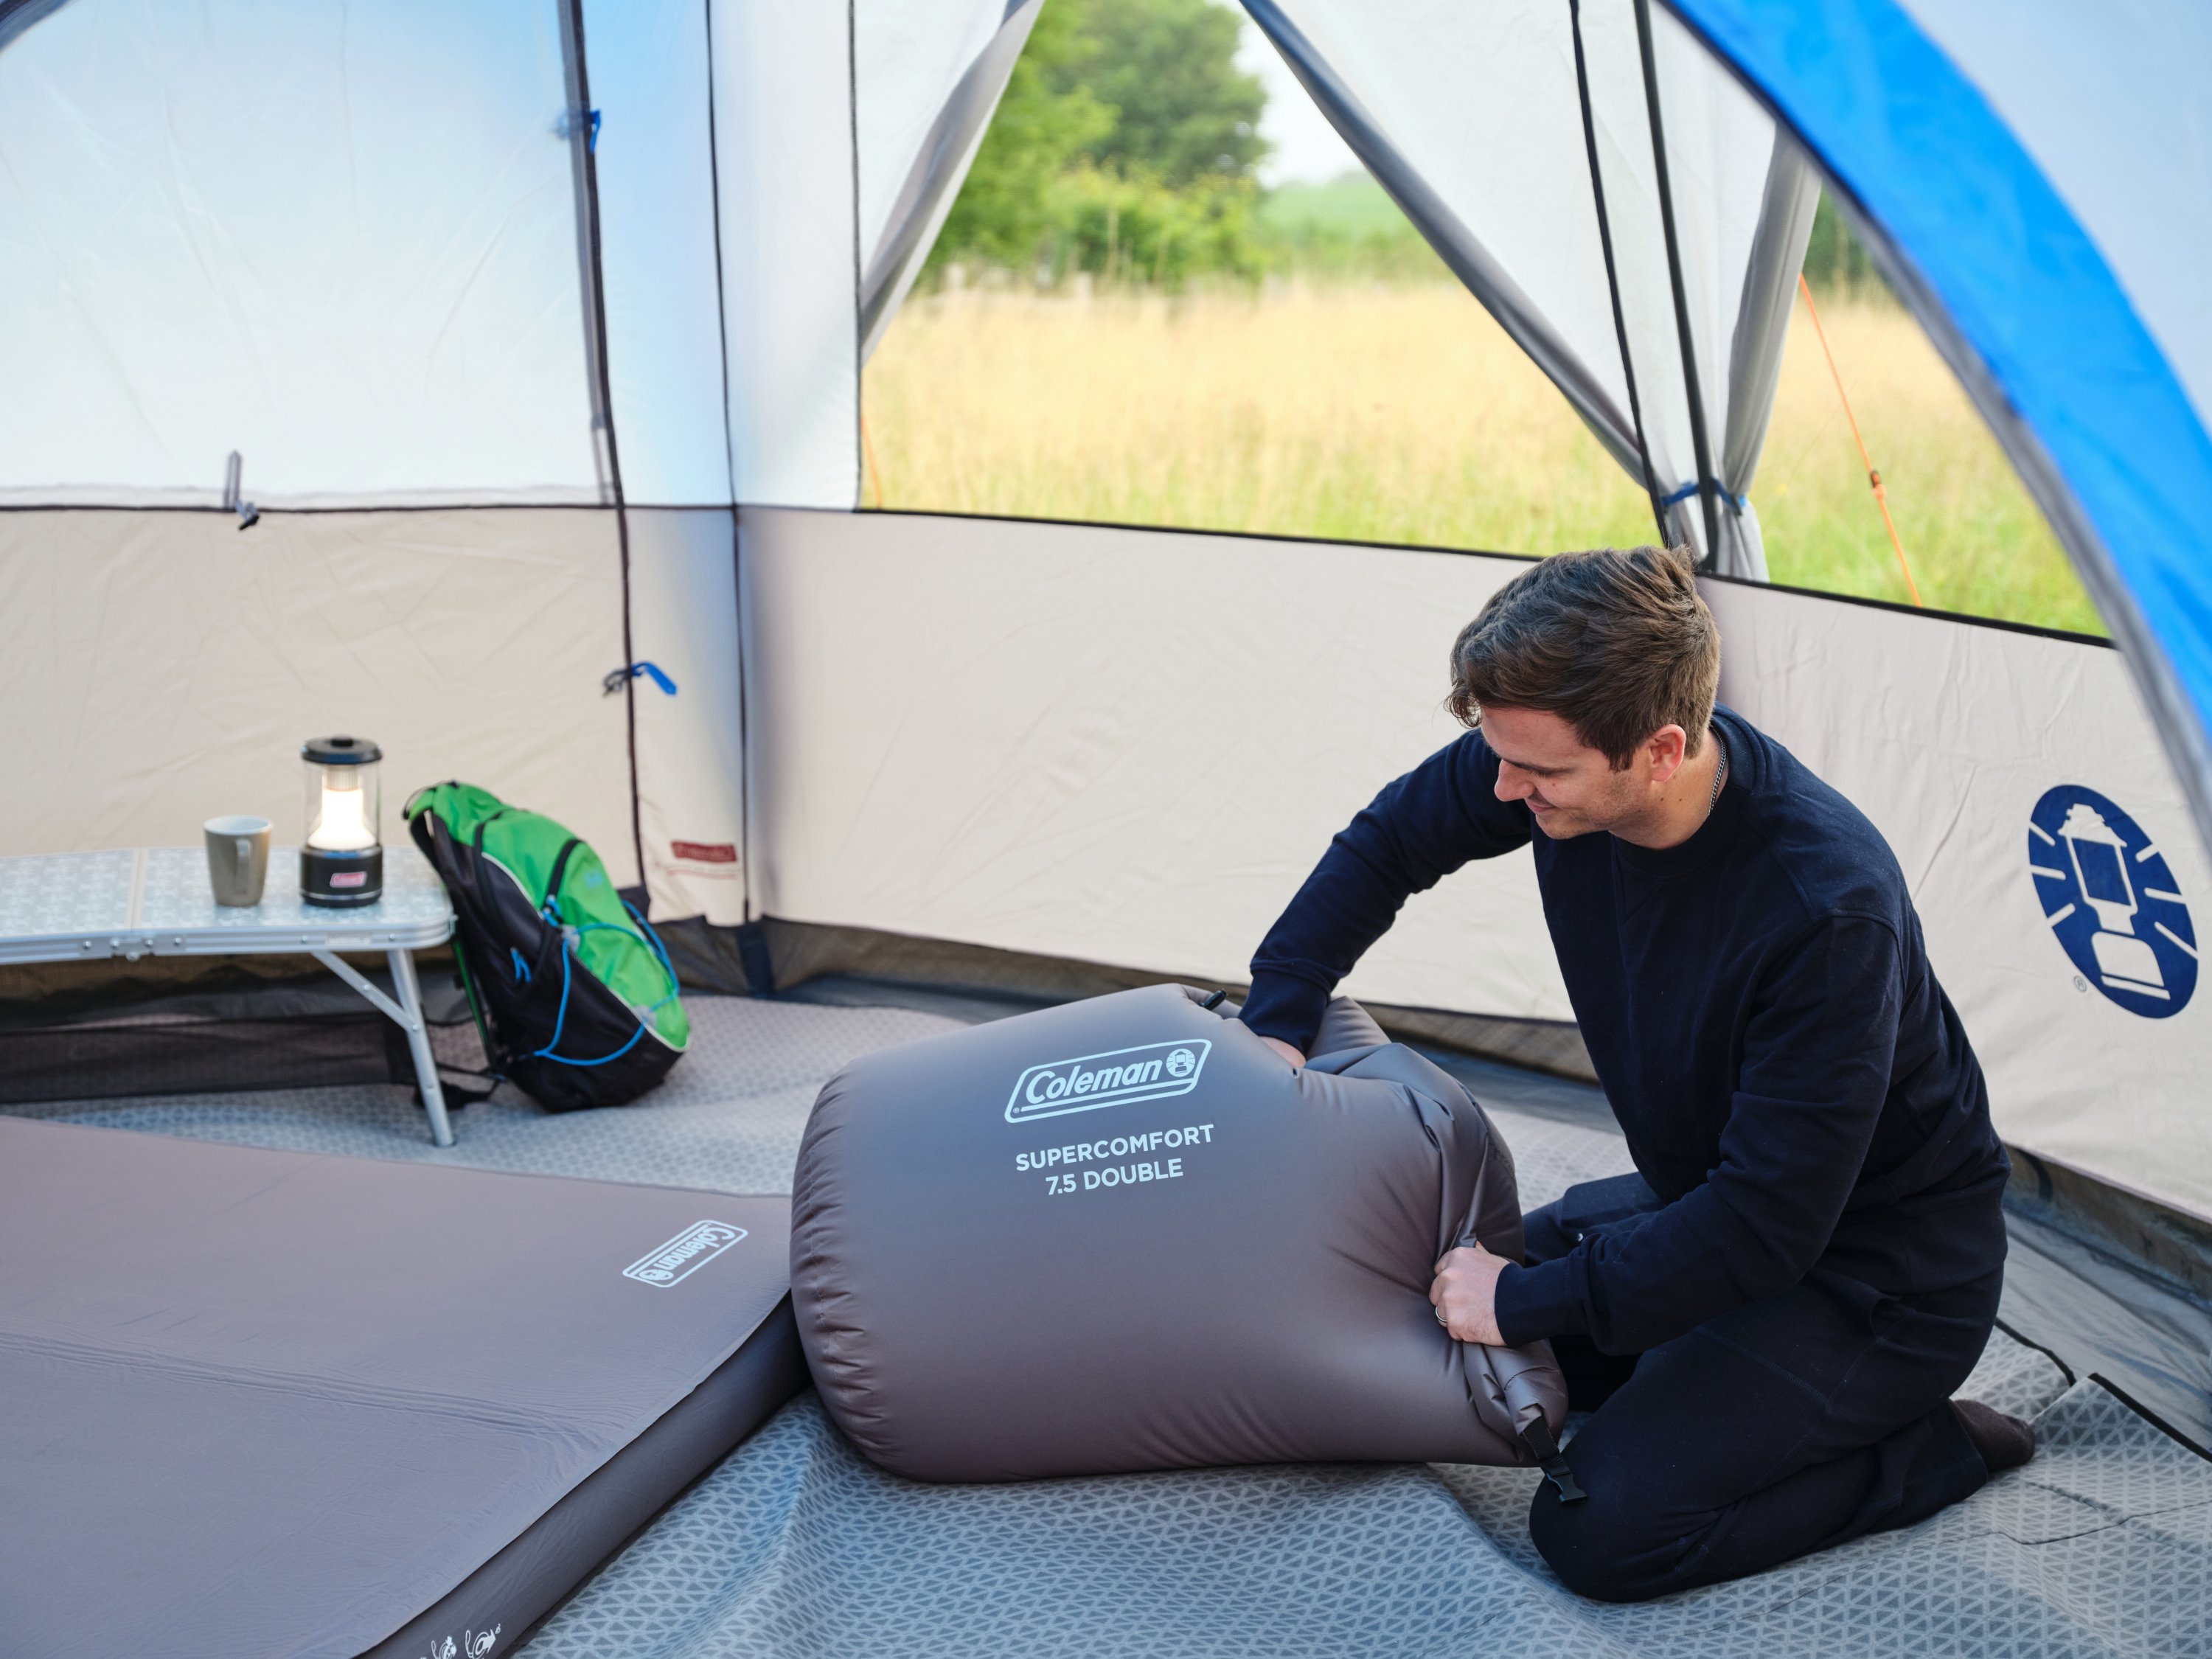 Supercomfort Self-Inflating Sleeping Mat 7.5cm Double | Coleman UK